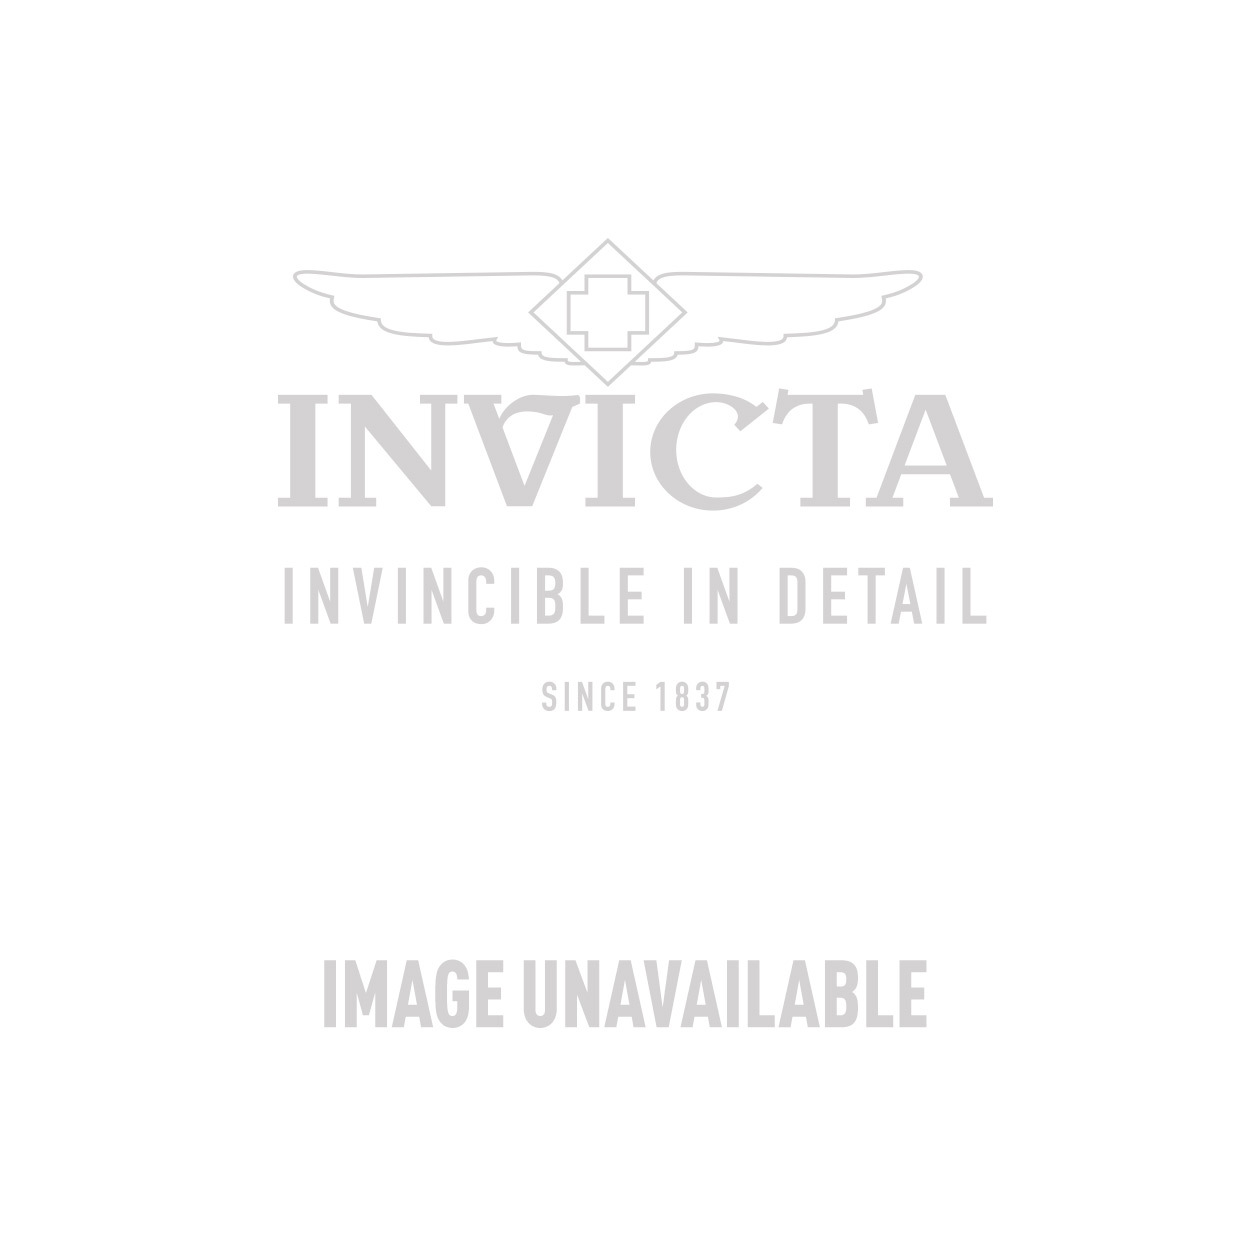 Invicta Objet D Art Mens Automatic 45 mm Black Case Silver Dial - Model 27554